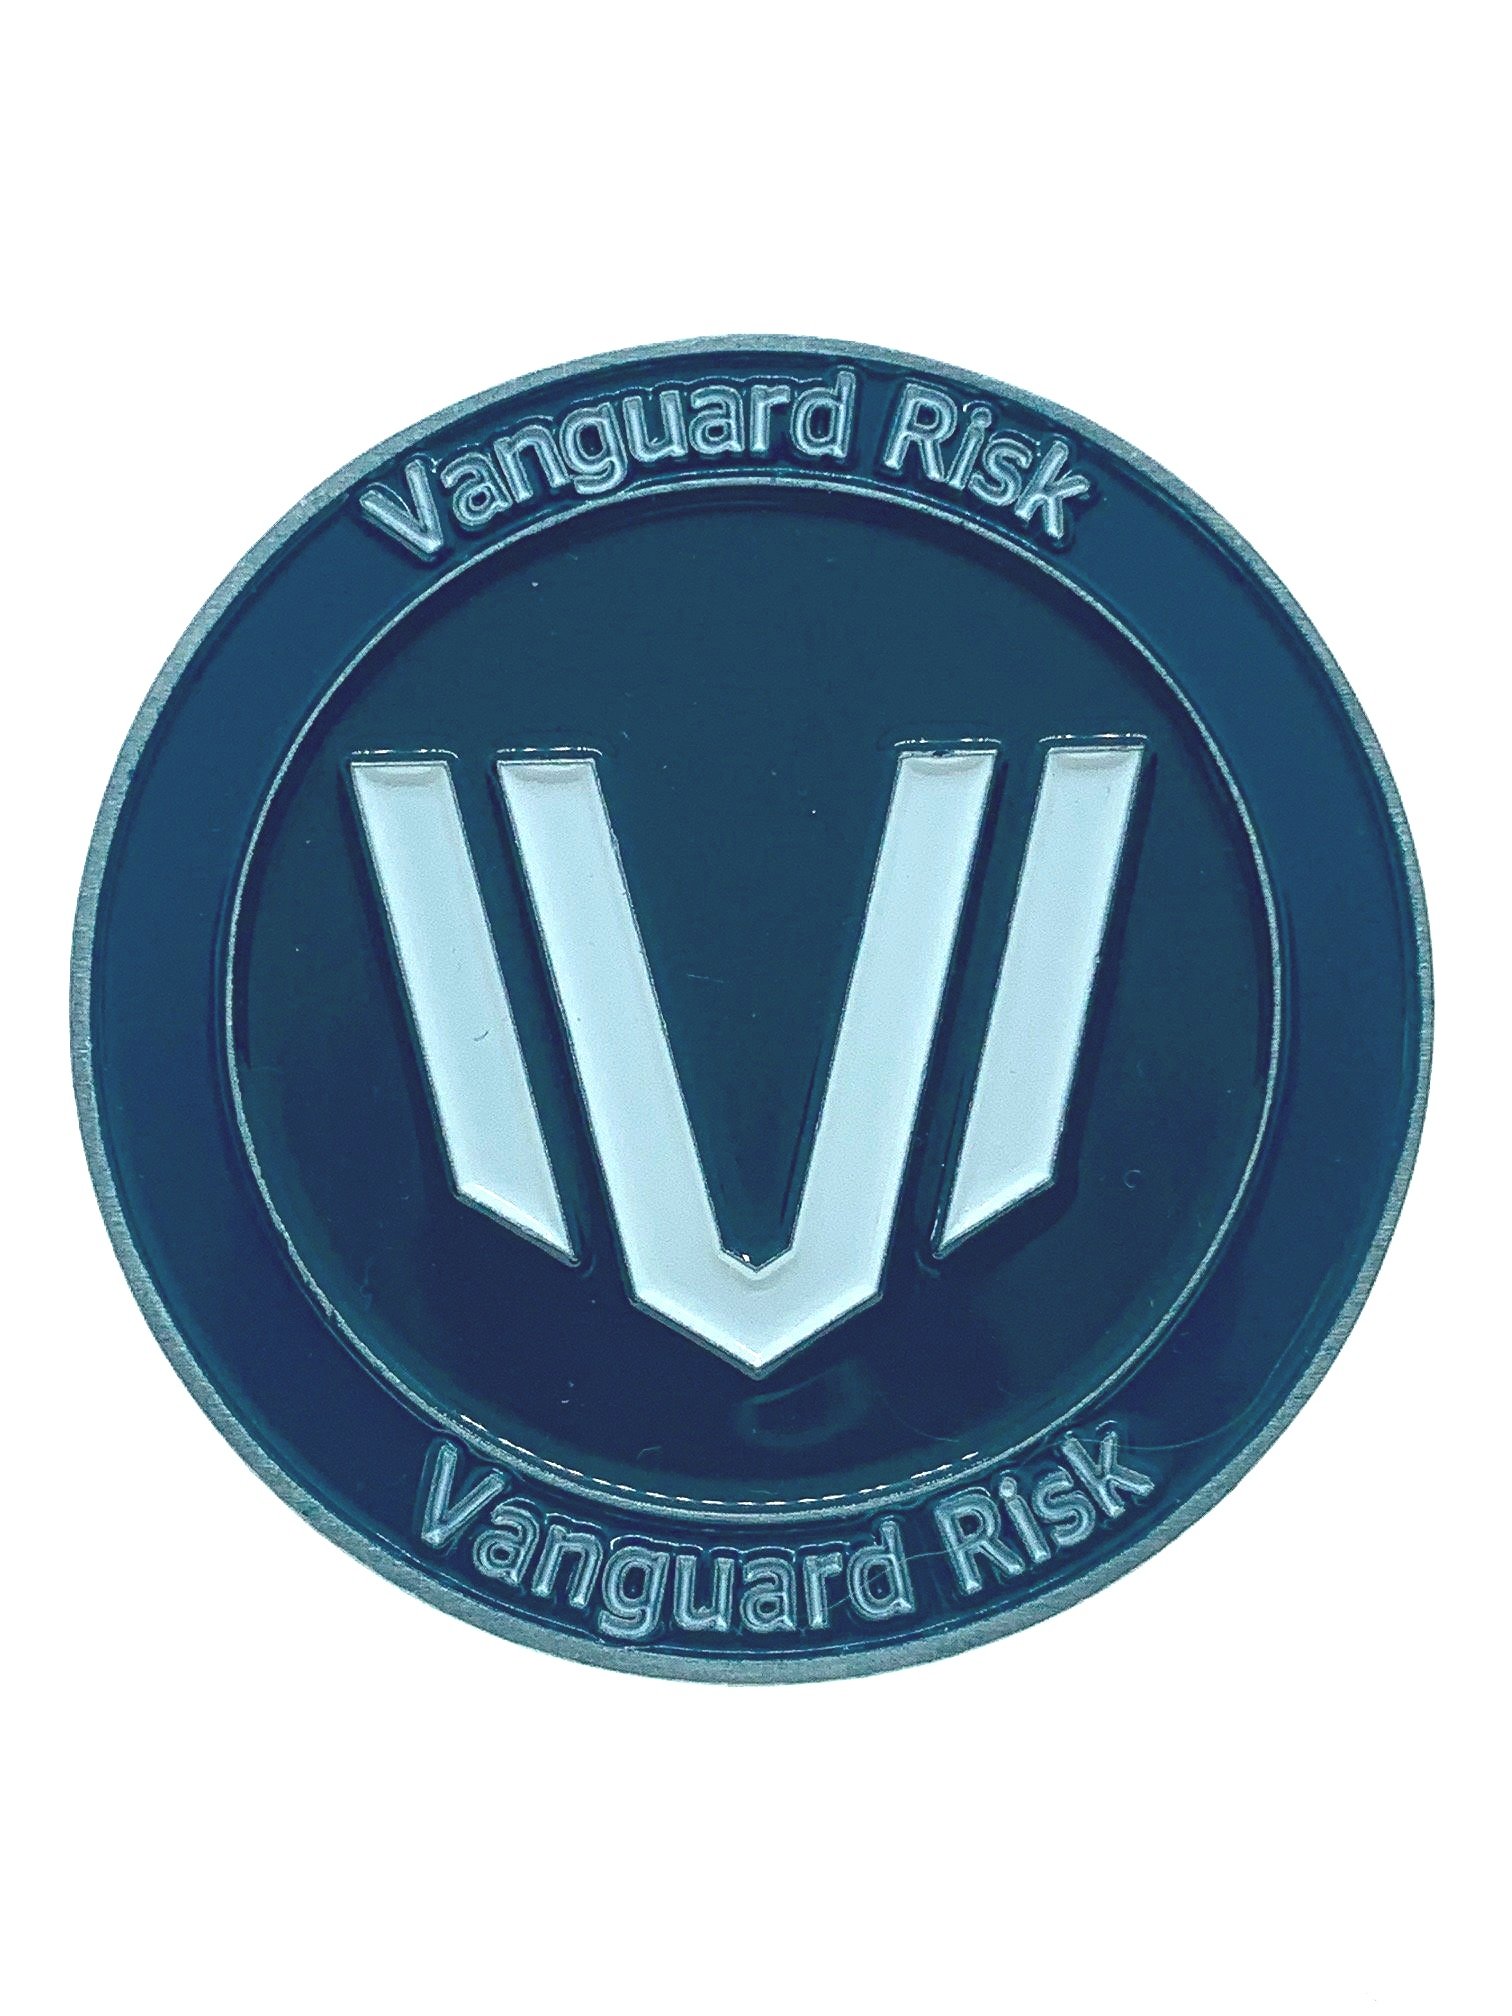 Vanguard Risk - Front